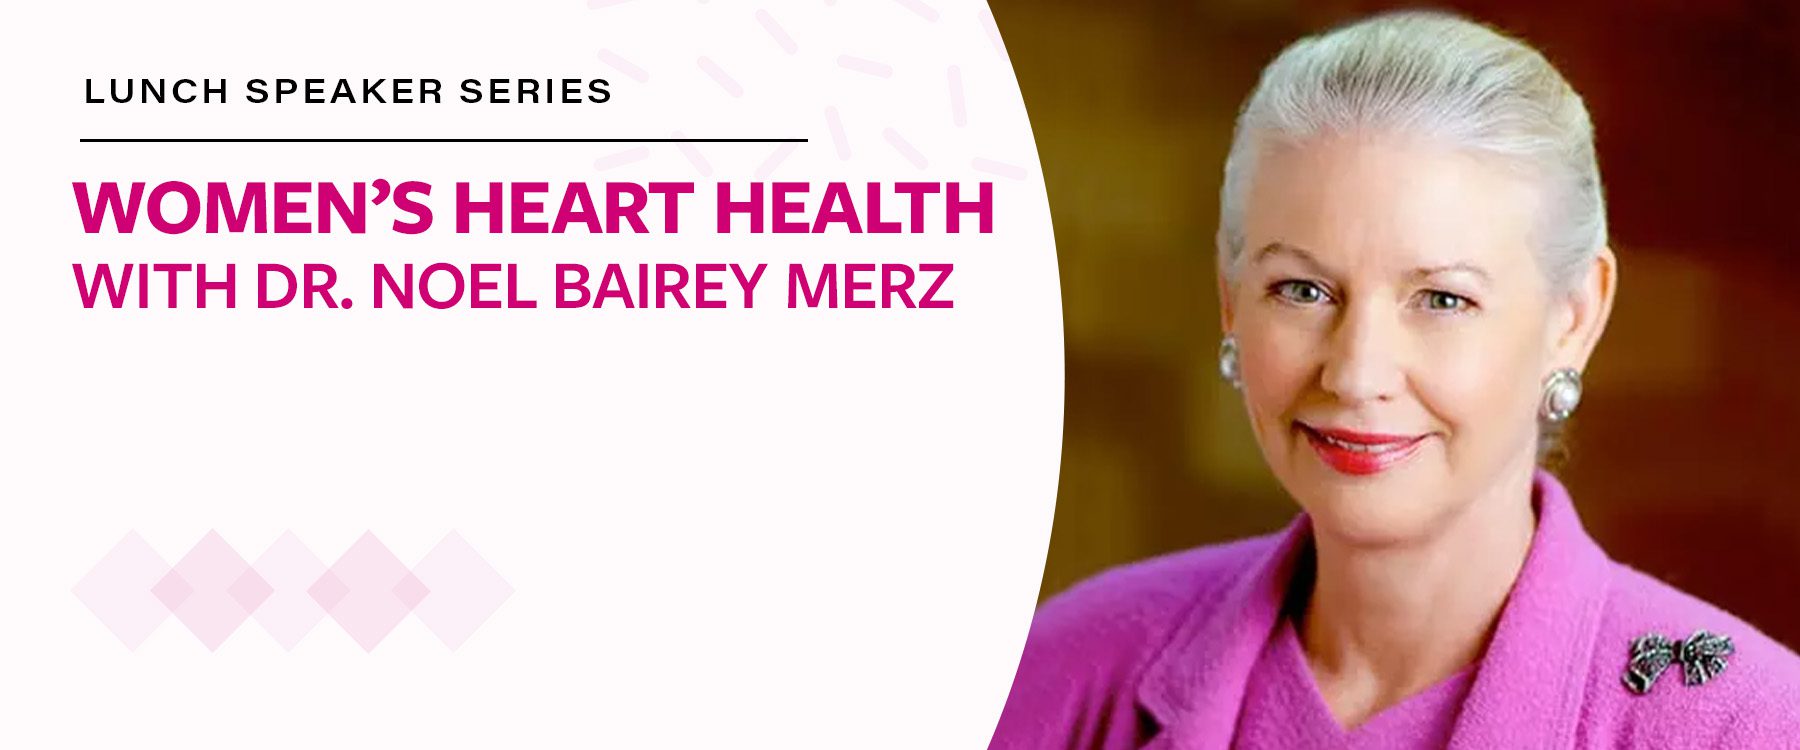 Lunch Speaker Series: Women's Heart Health with Dr. Noel Bairey Merz